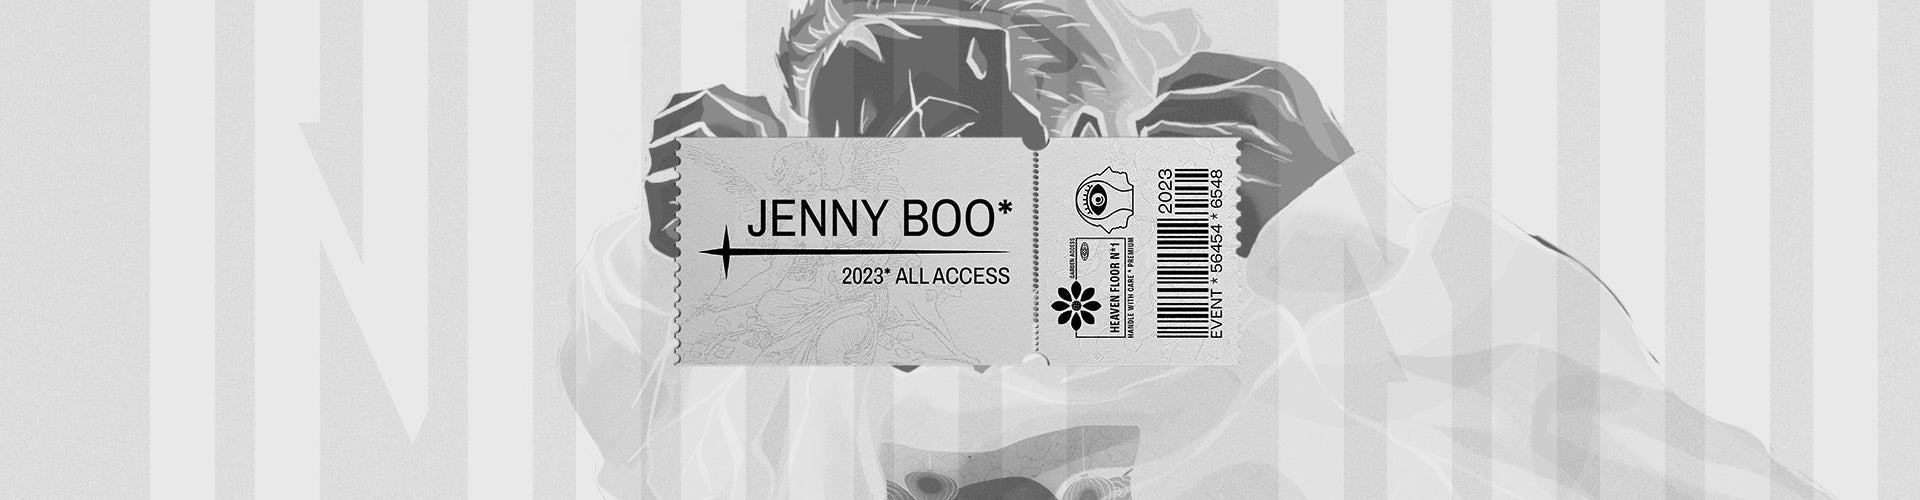 Jenny Boo * Prints